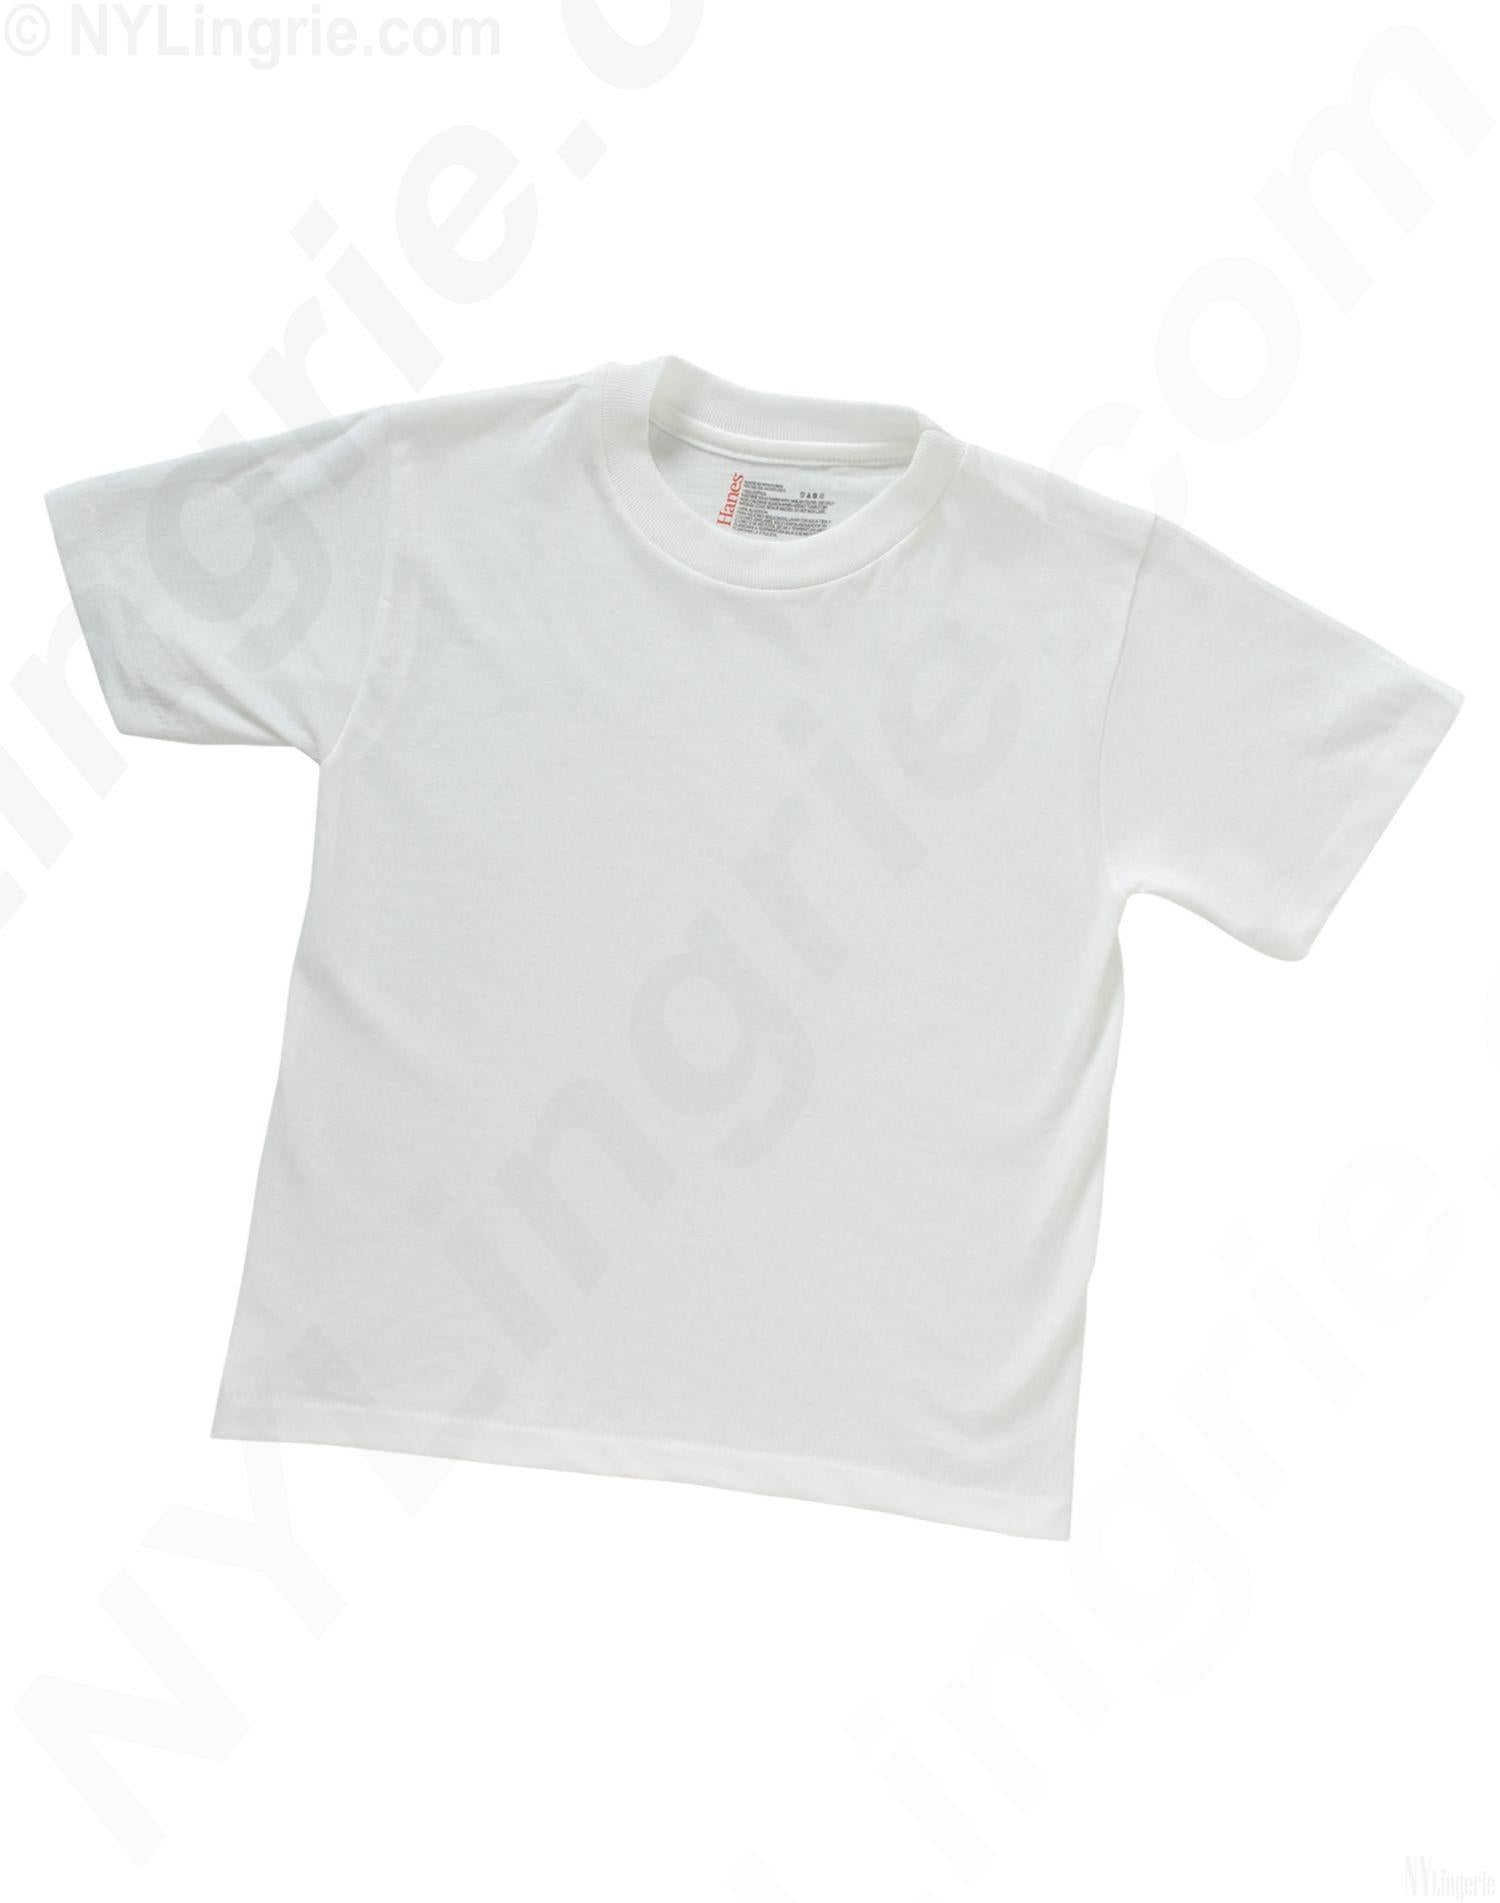 B2138 - Hanes ComfortSoft Tagless Boys' Crewneck T-Shirt 3 Pack